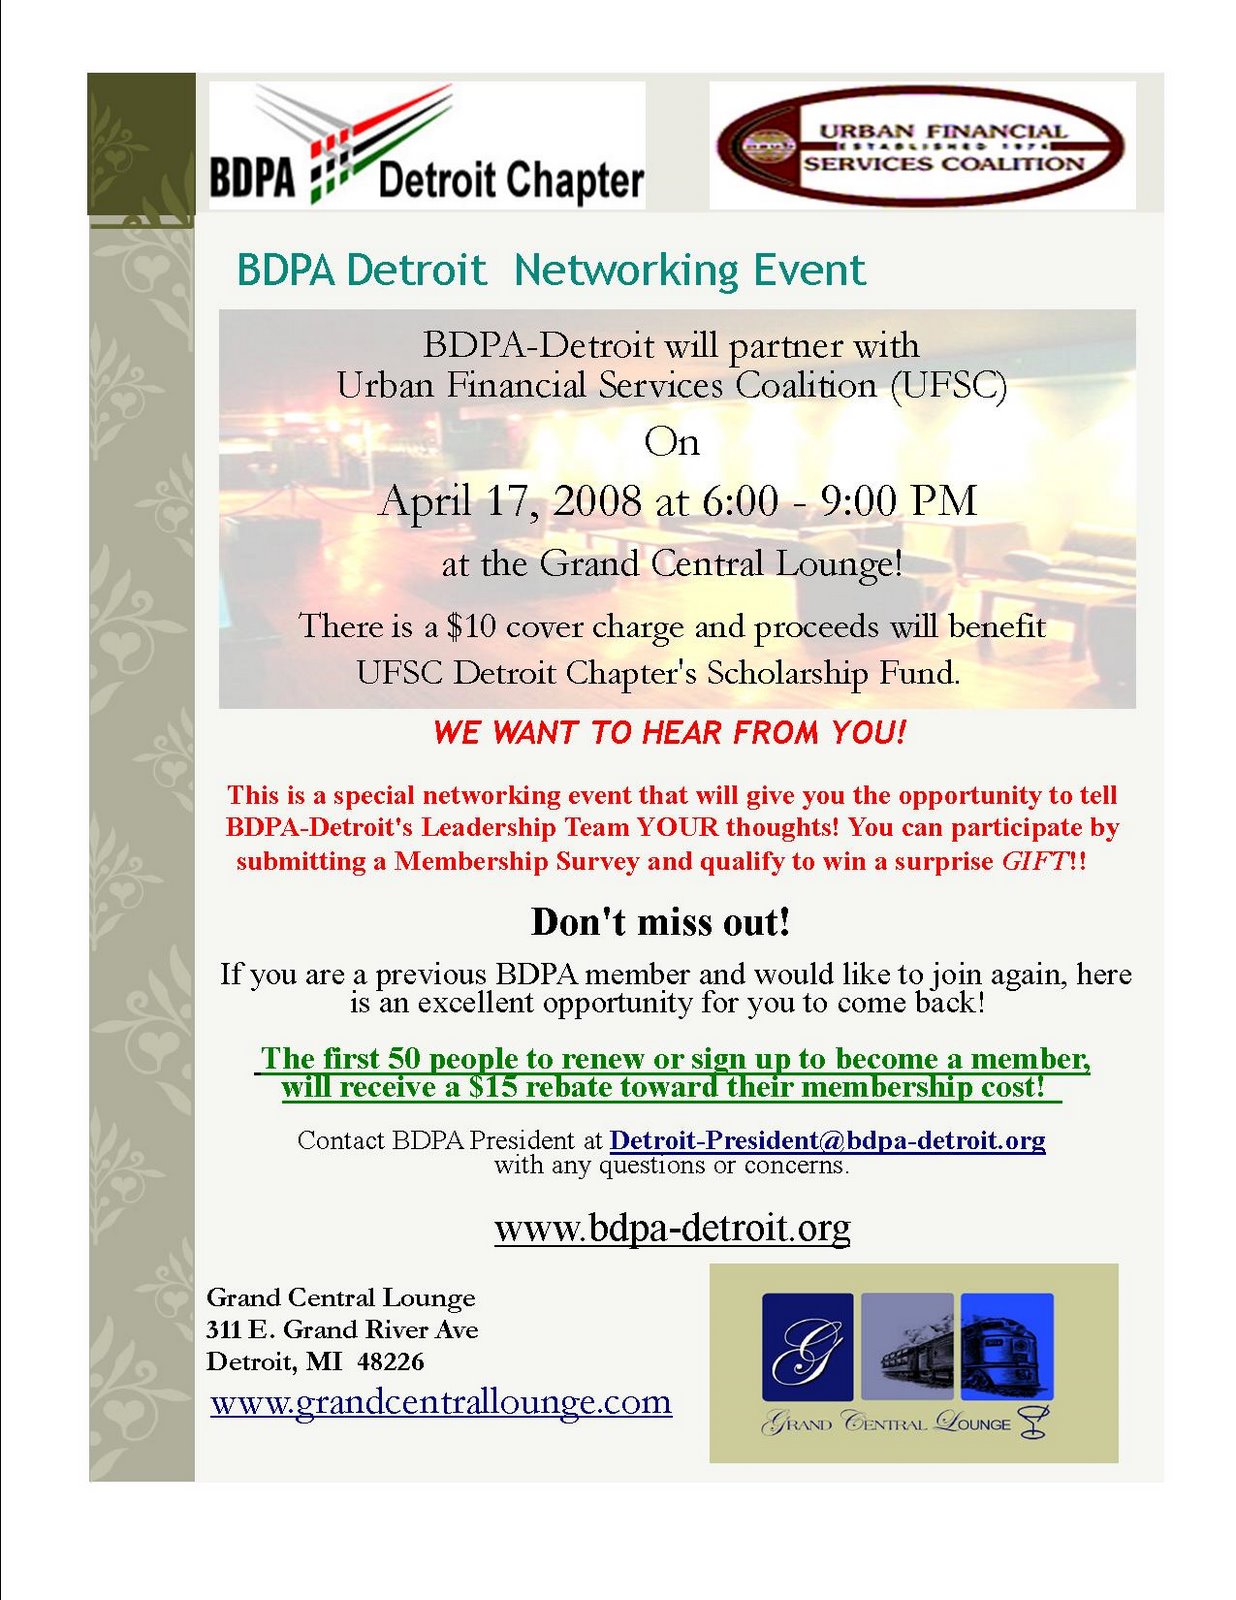 [BDPA+Detroit+Networking+event.jpg]